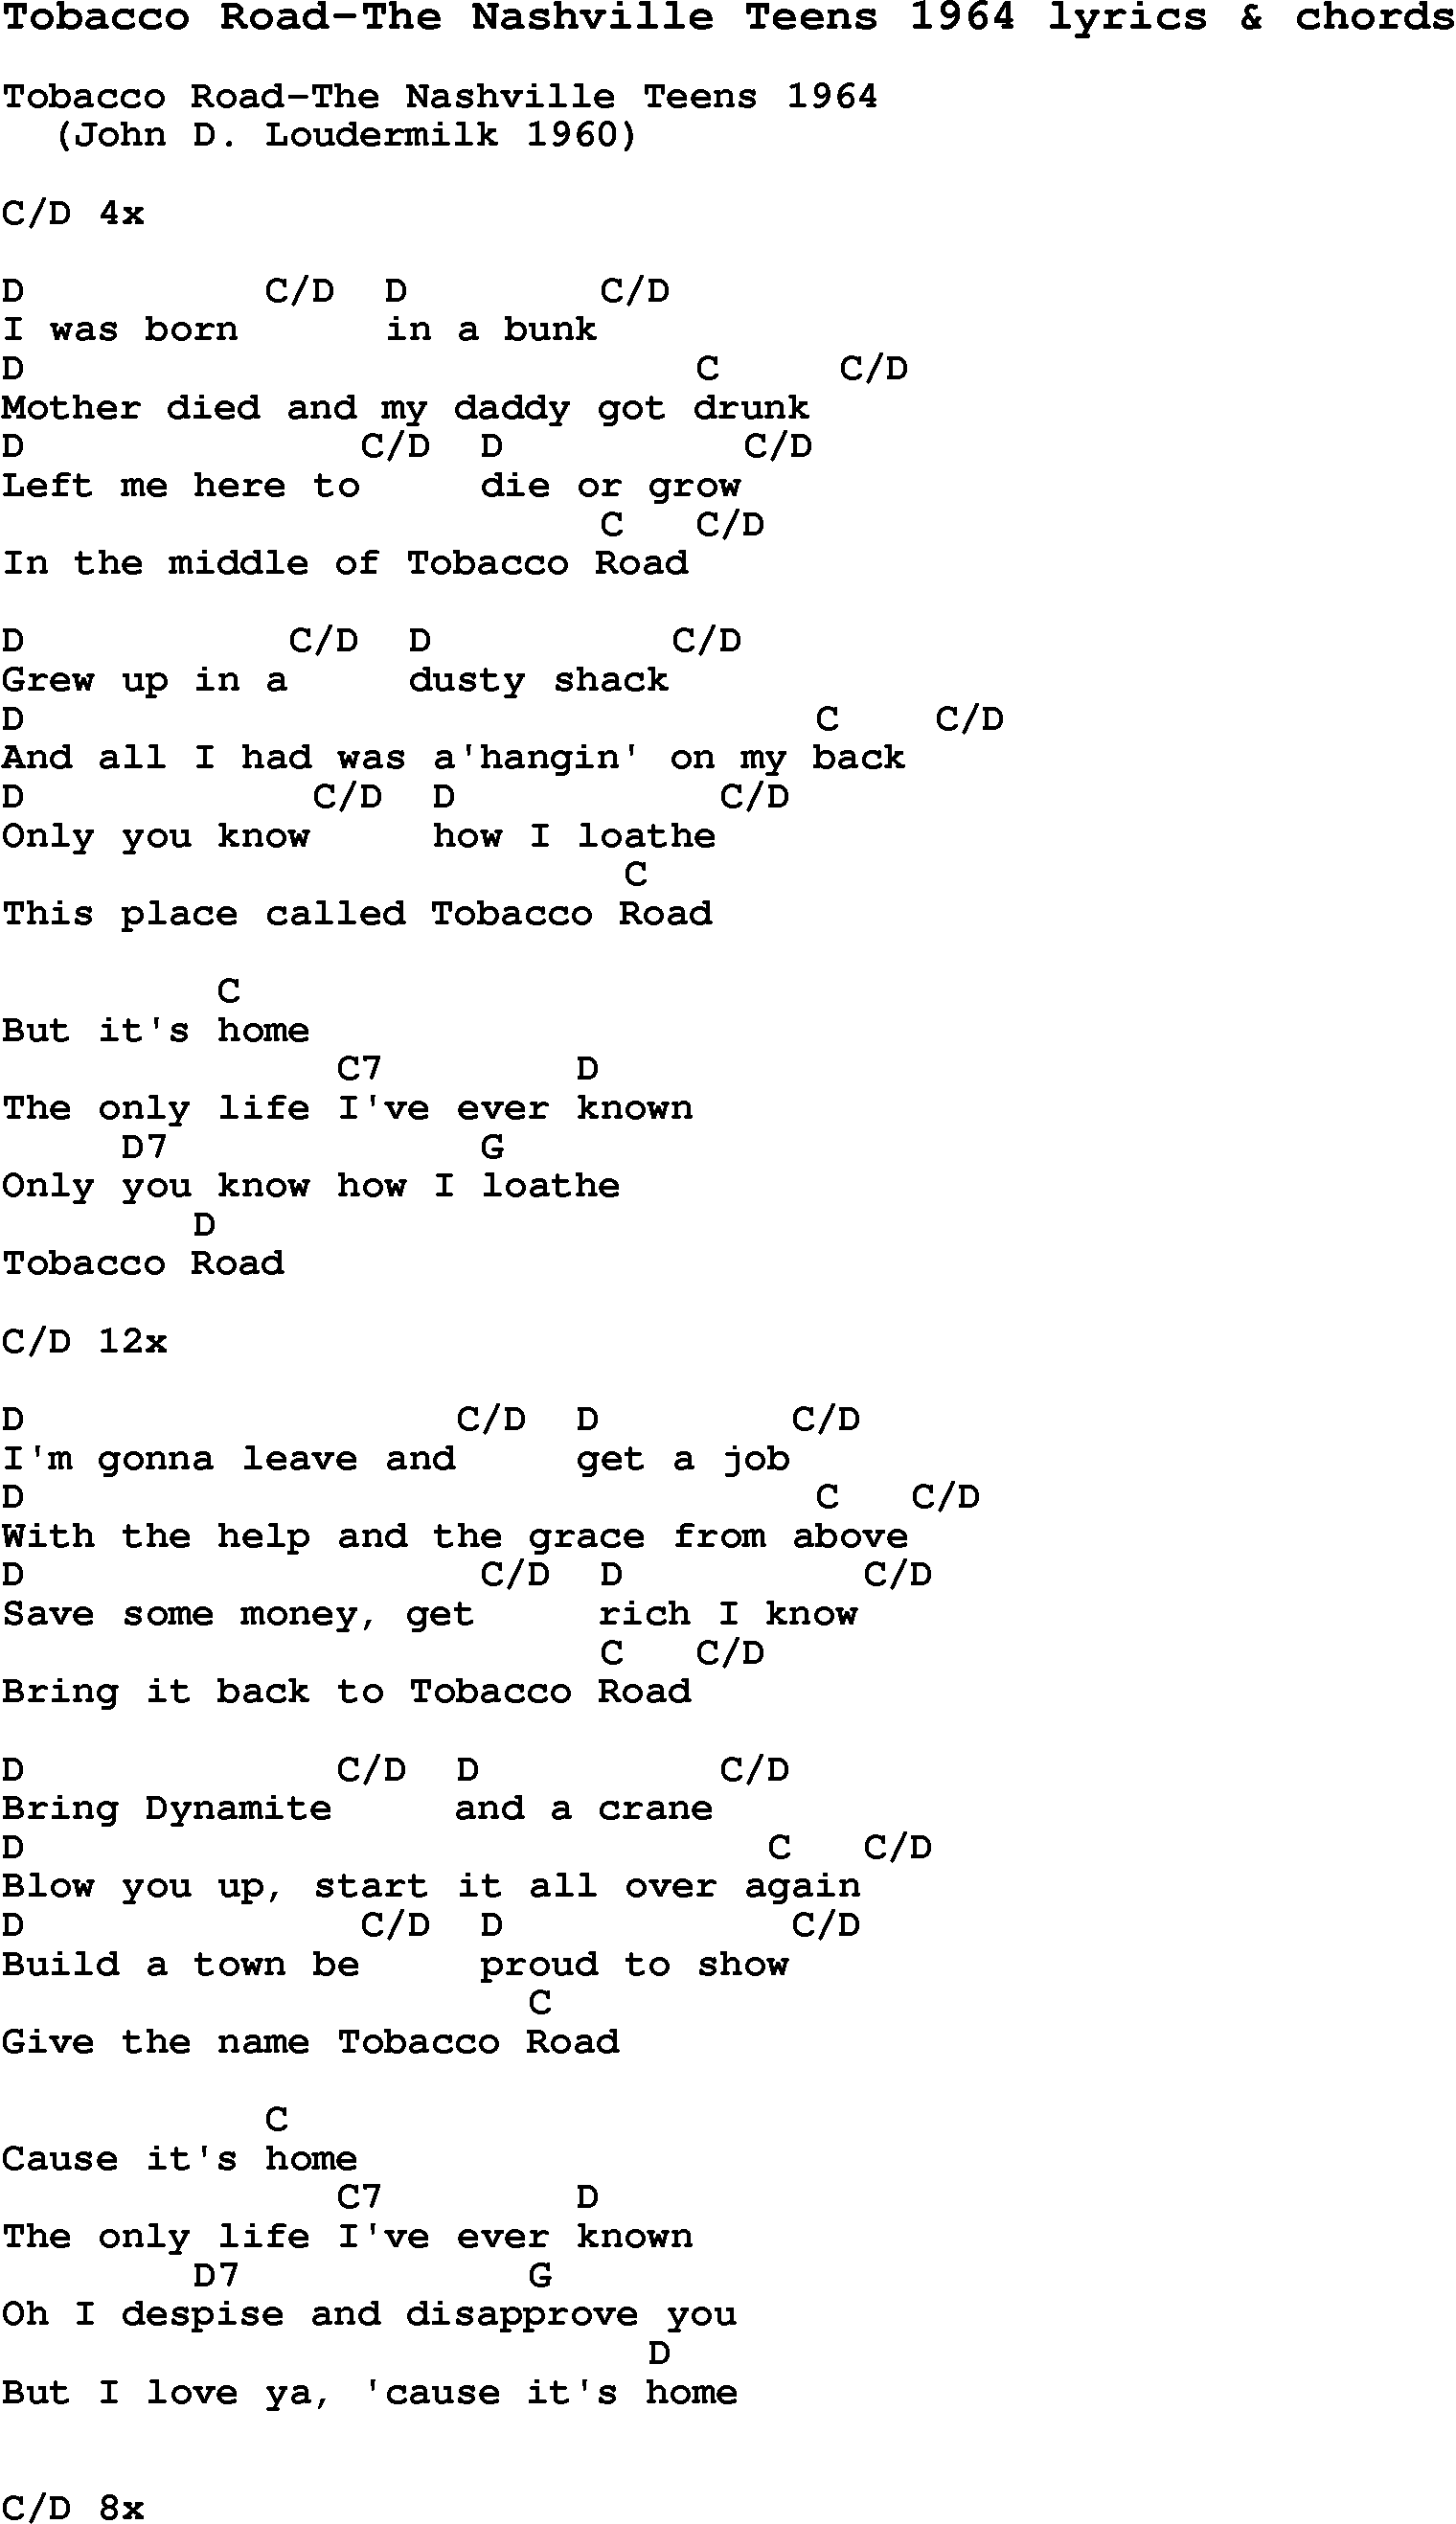 Love Song Lyrics for: Tobacco Road-The Nashville Teens 1964 with chords for Ukulele, Guitar Banjo etc.